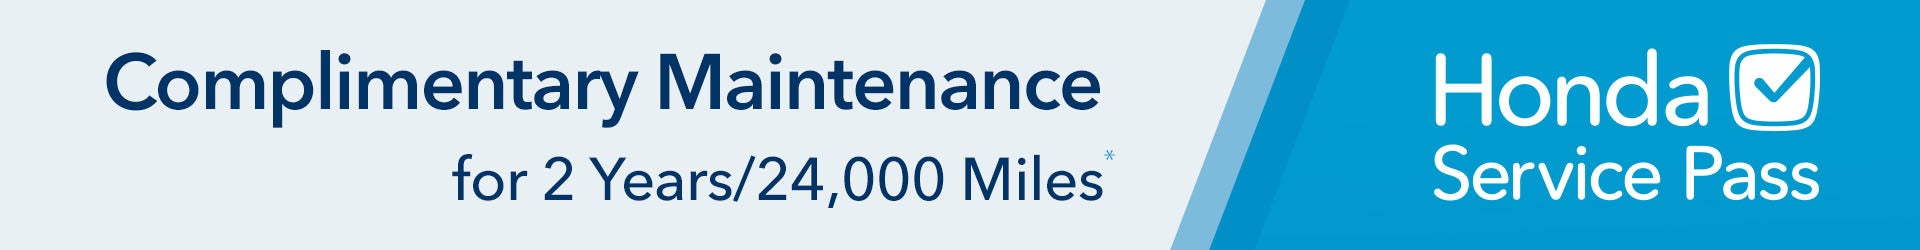 Complimentary Maintenance for 2 years / 24,000 Miles Honda Service Pass | Marthaler Honda in Albert Lea MN